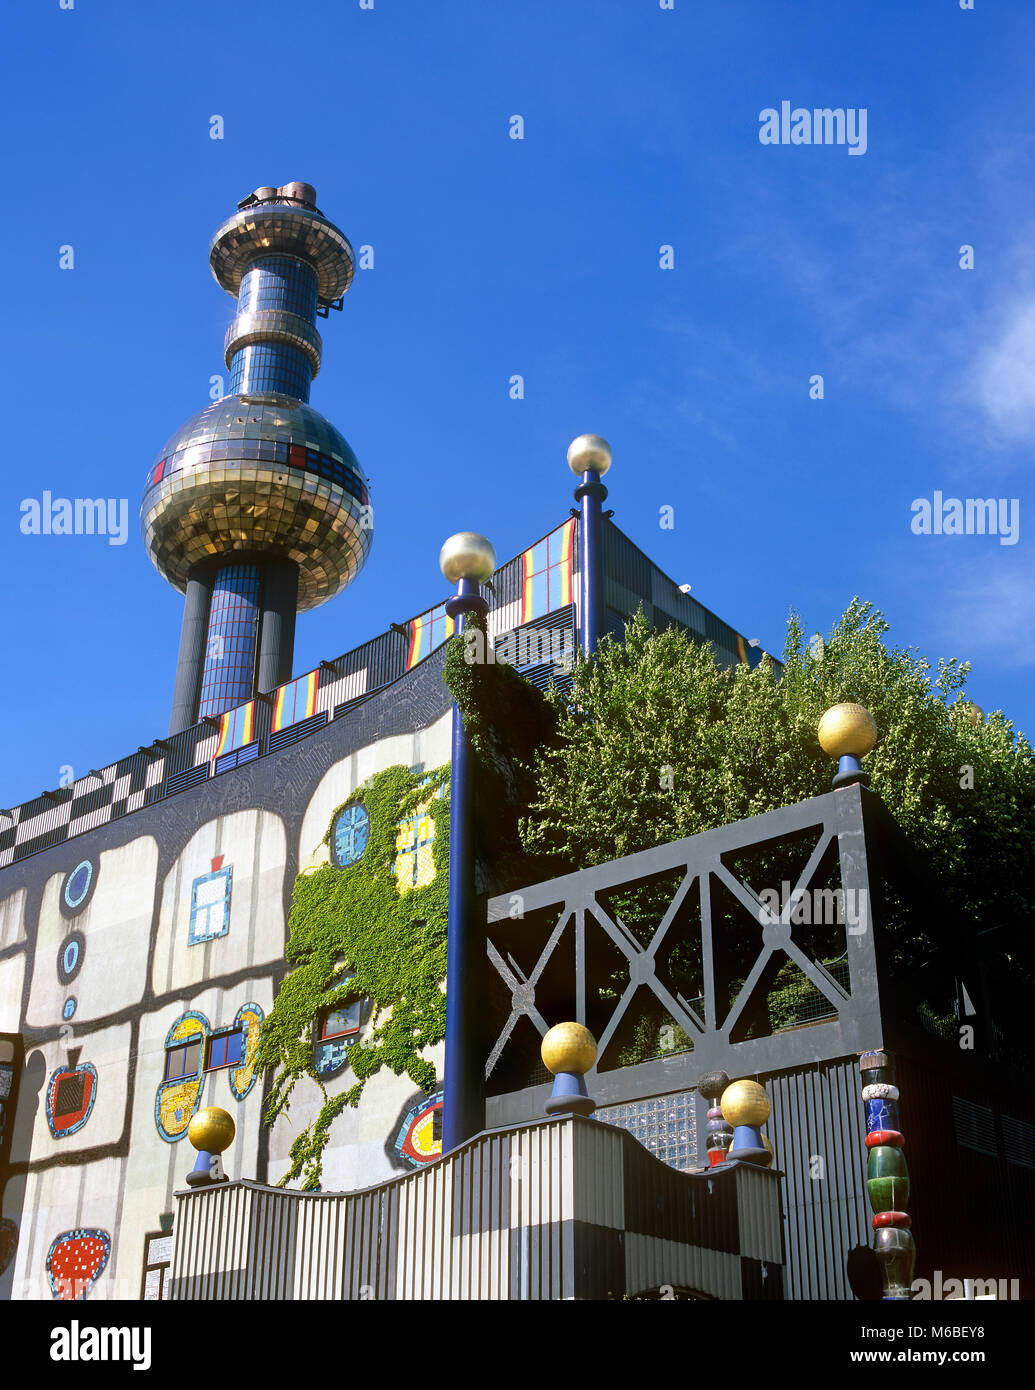 The Spittelau waste incinerator, Vienna, Austria. The building's exterior was designed by the artist and designer Friedensreich Hundertwasser. Stock Photo